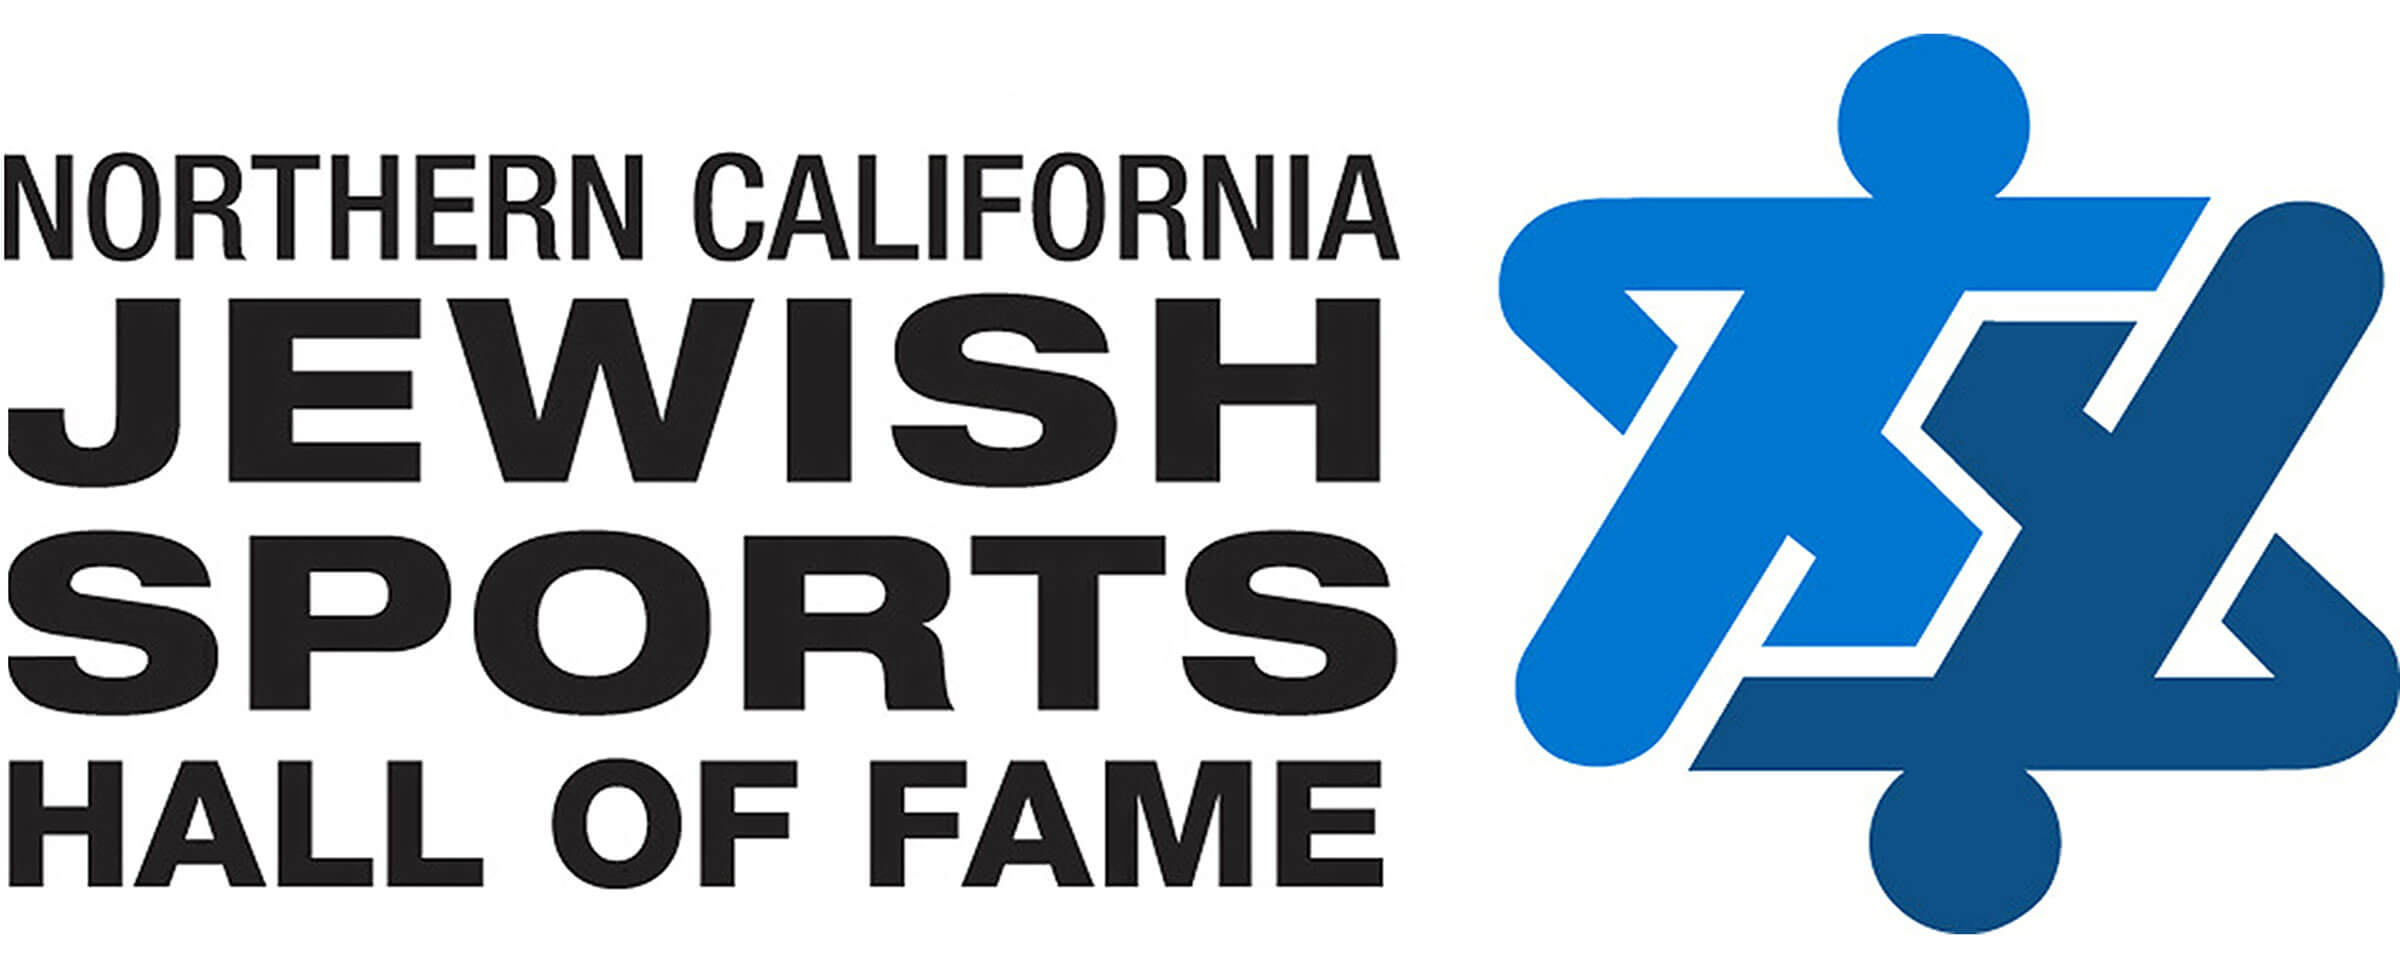 Northern California Jewish Sports Hall of Fame